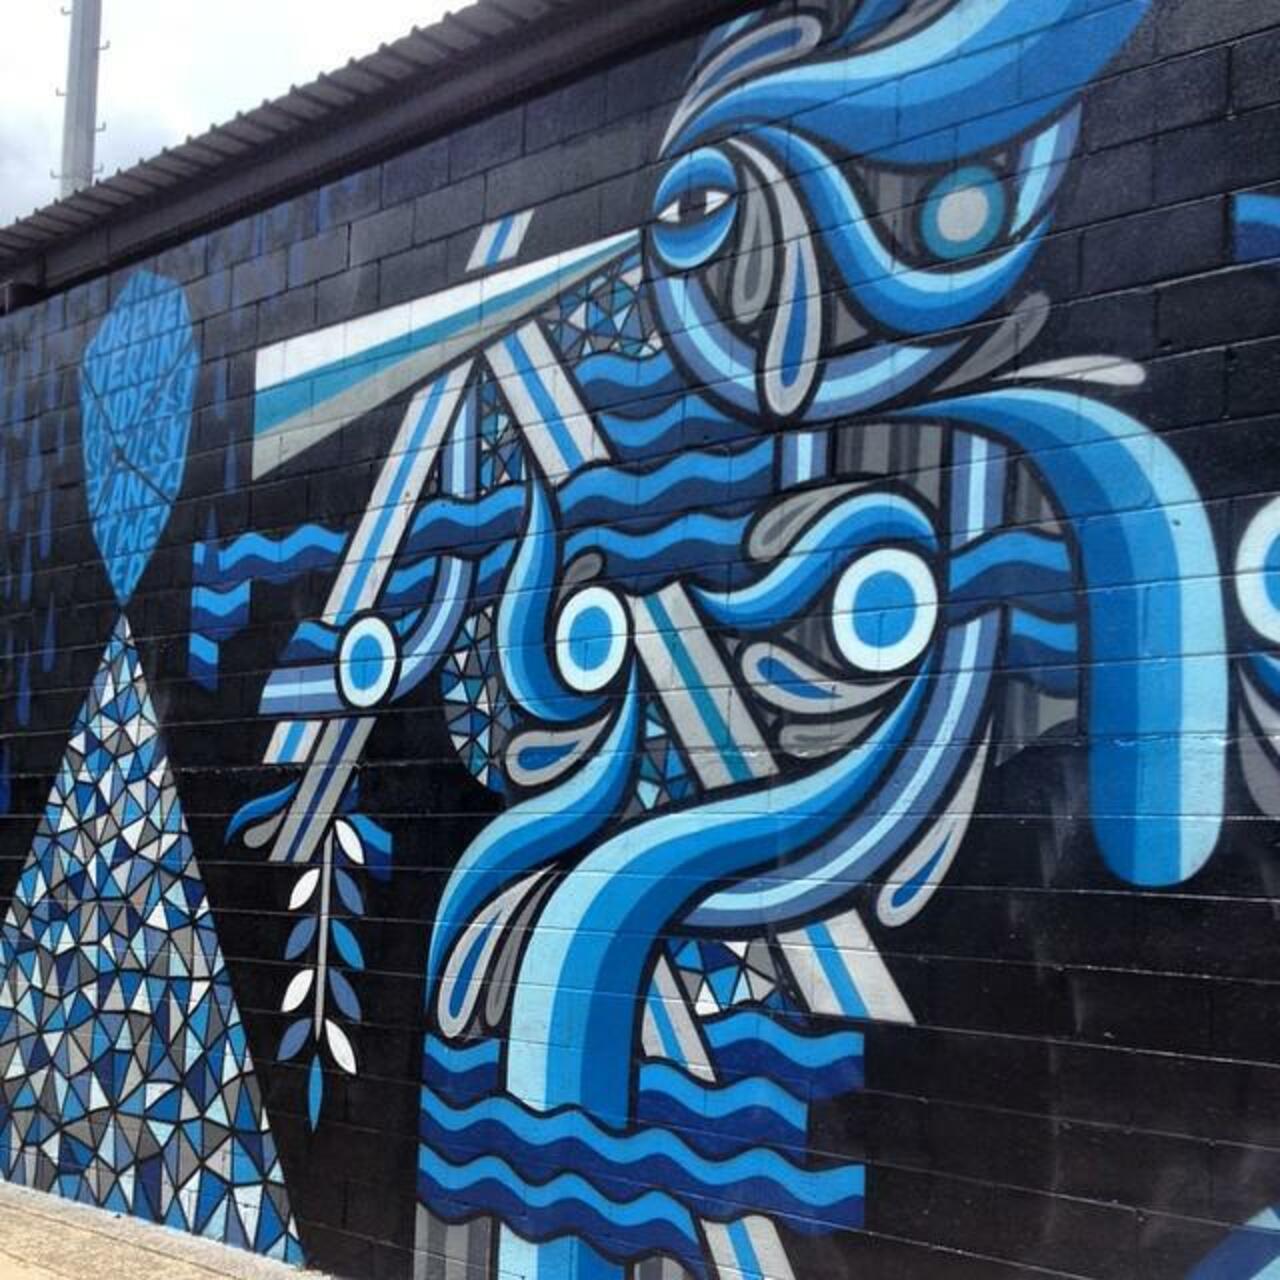 Beastman. #beastman #graffiti #walls #mural #instagrafite #streetart #urbanart #instaart #streetartsydney #sydneyst… http://t.co/swptjjBynX